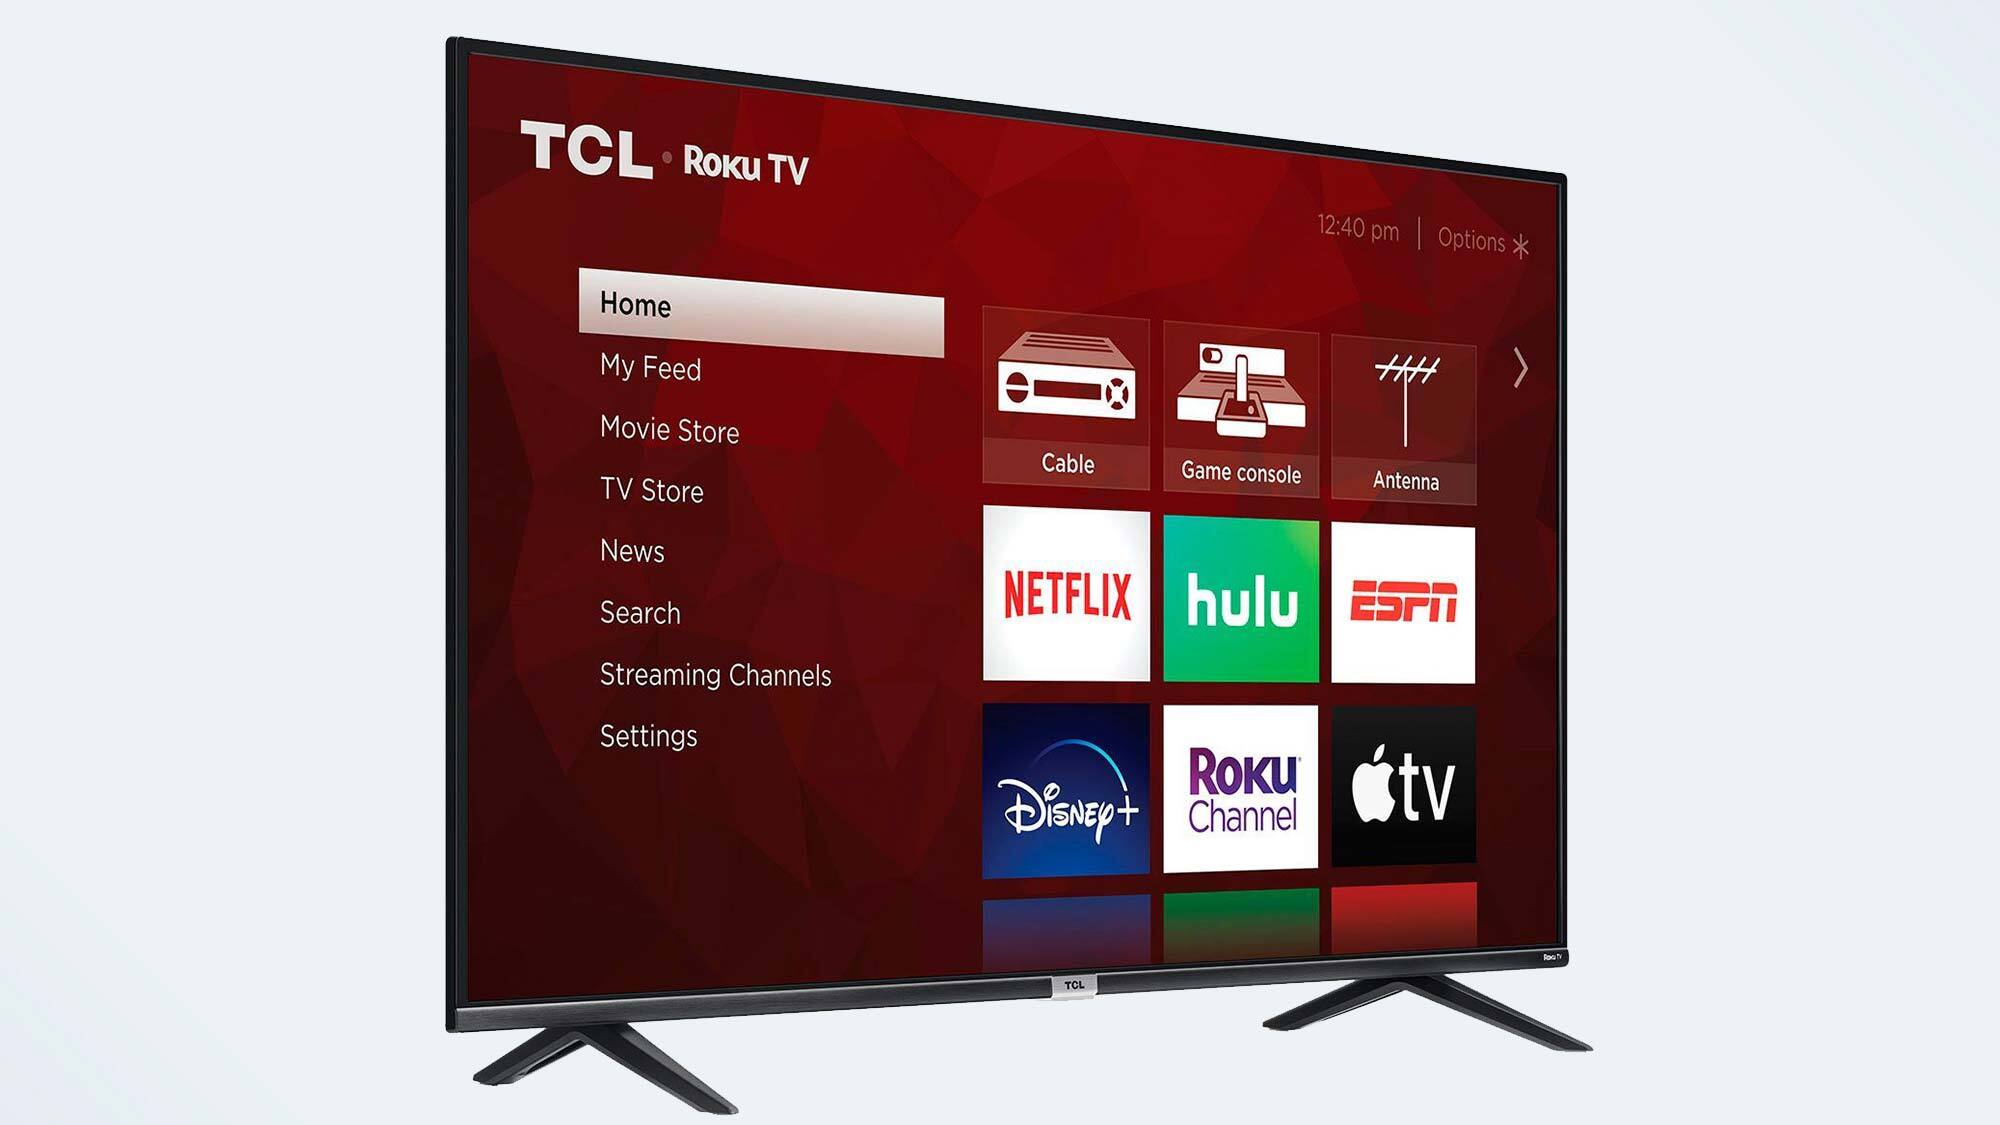 Best TCL TVs: TCL 4-Series Roku TV (S435)